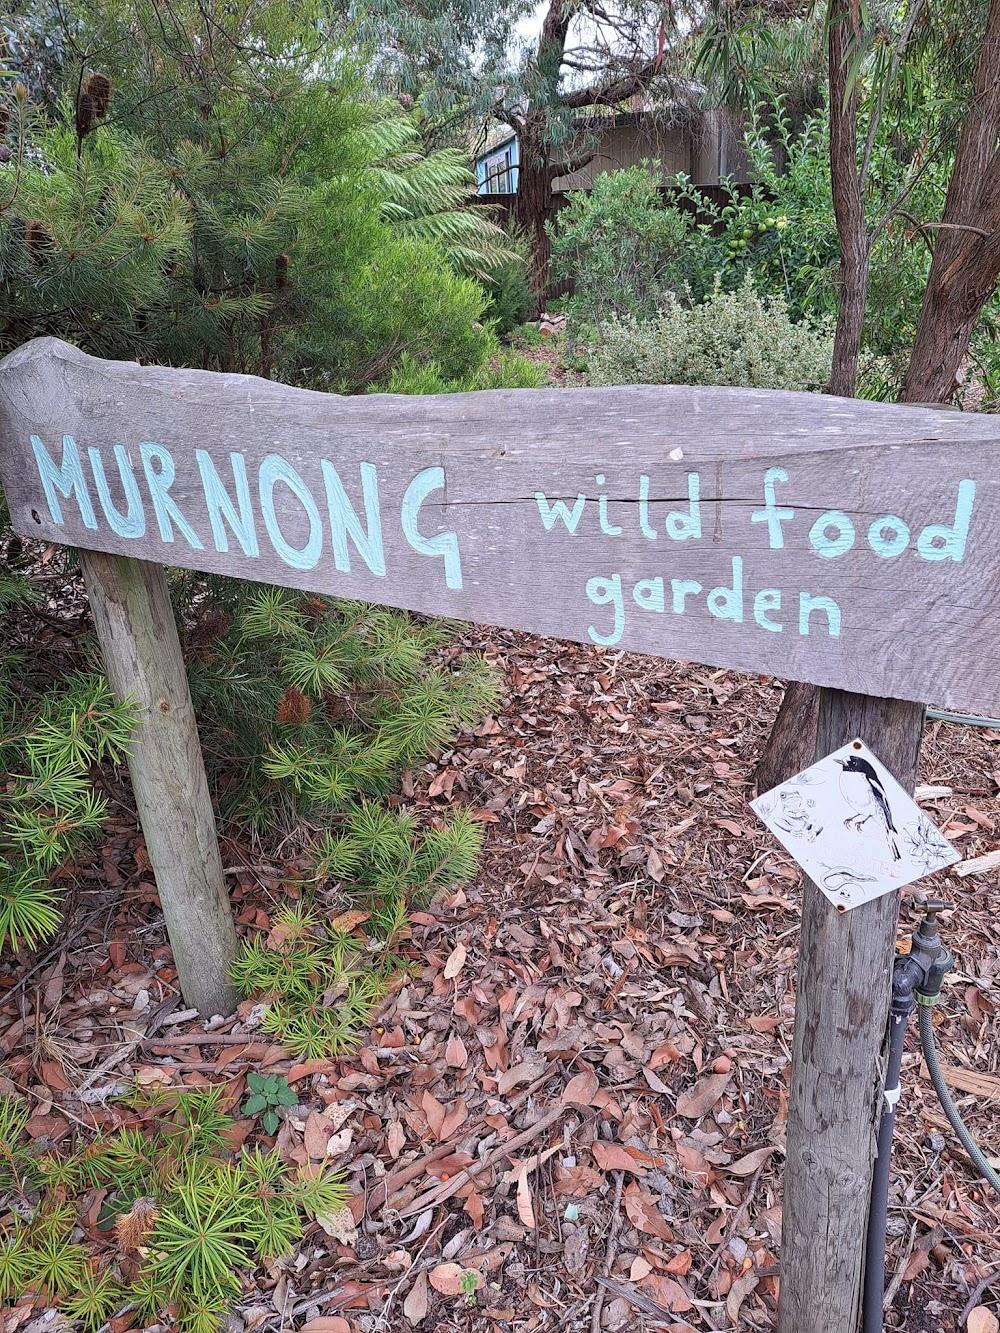 Murnong Wild Food Garden sign